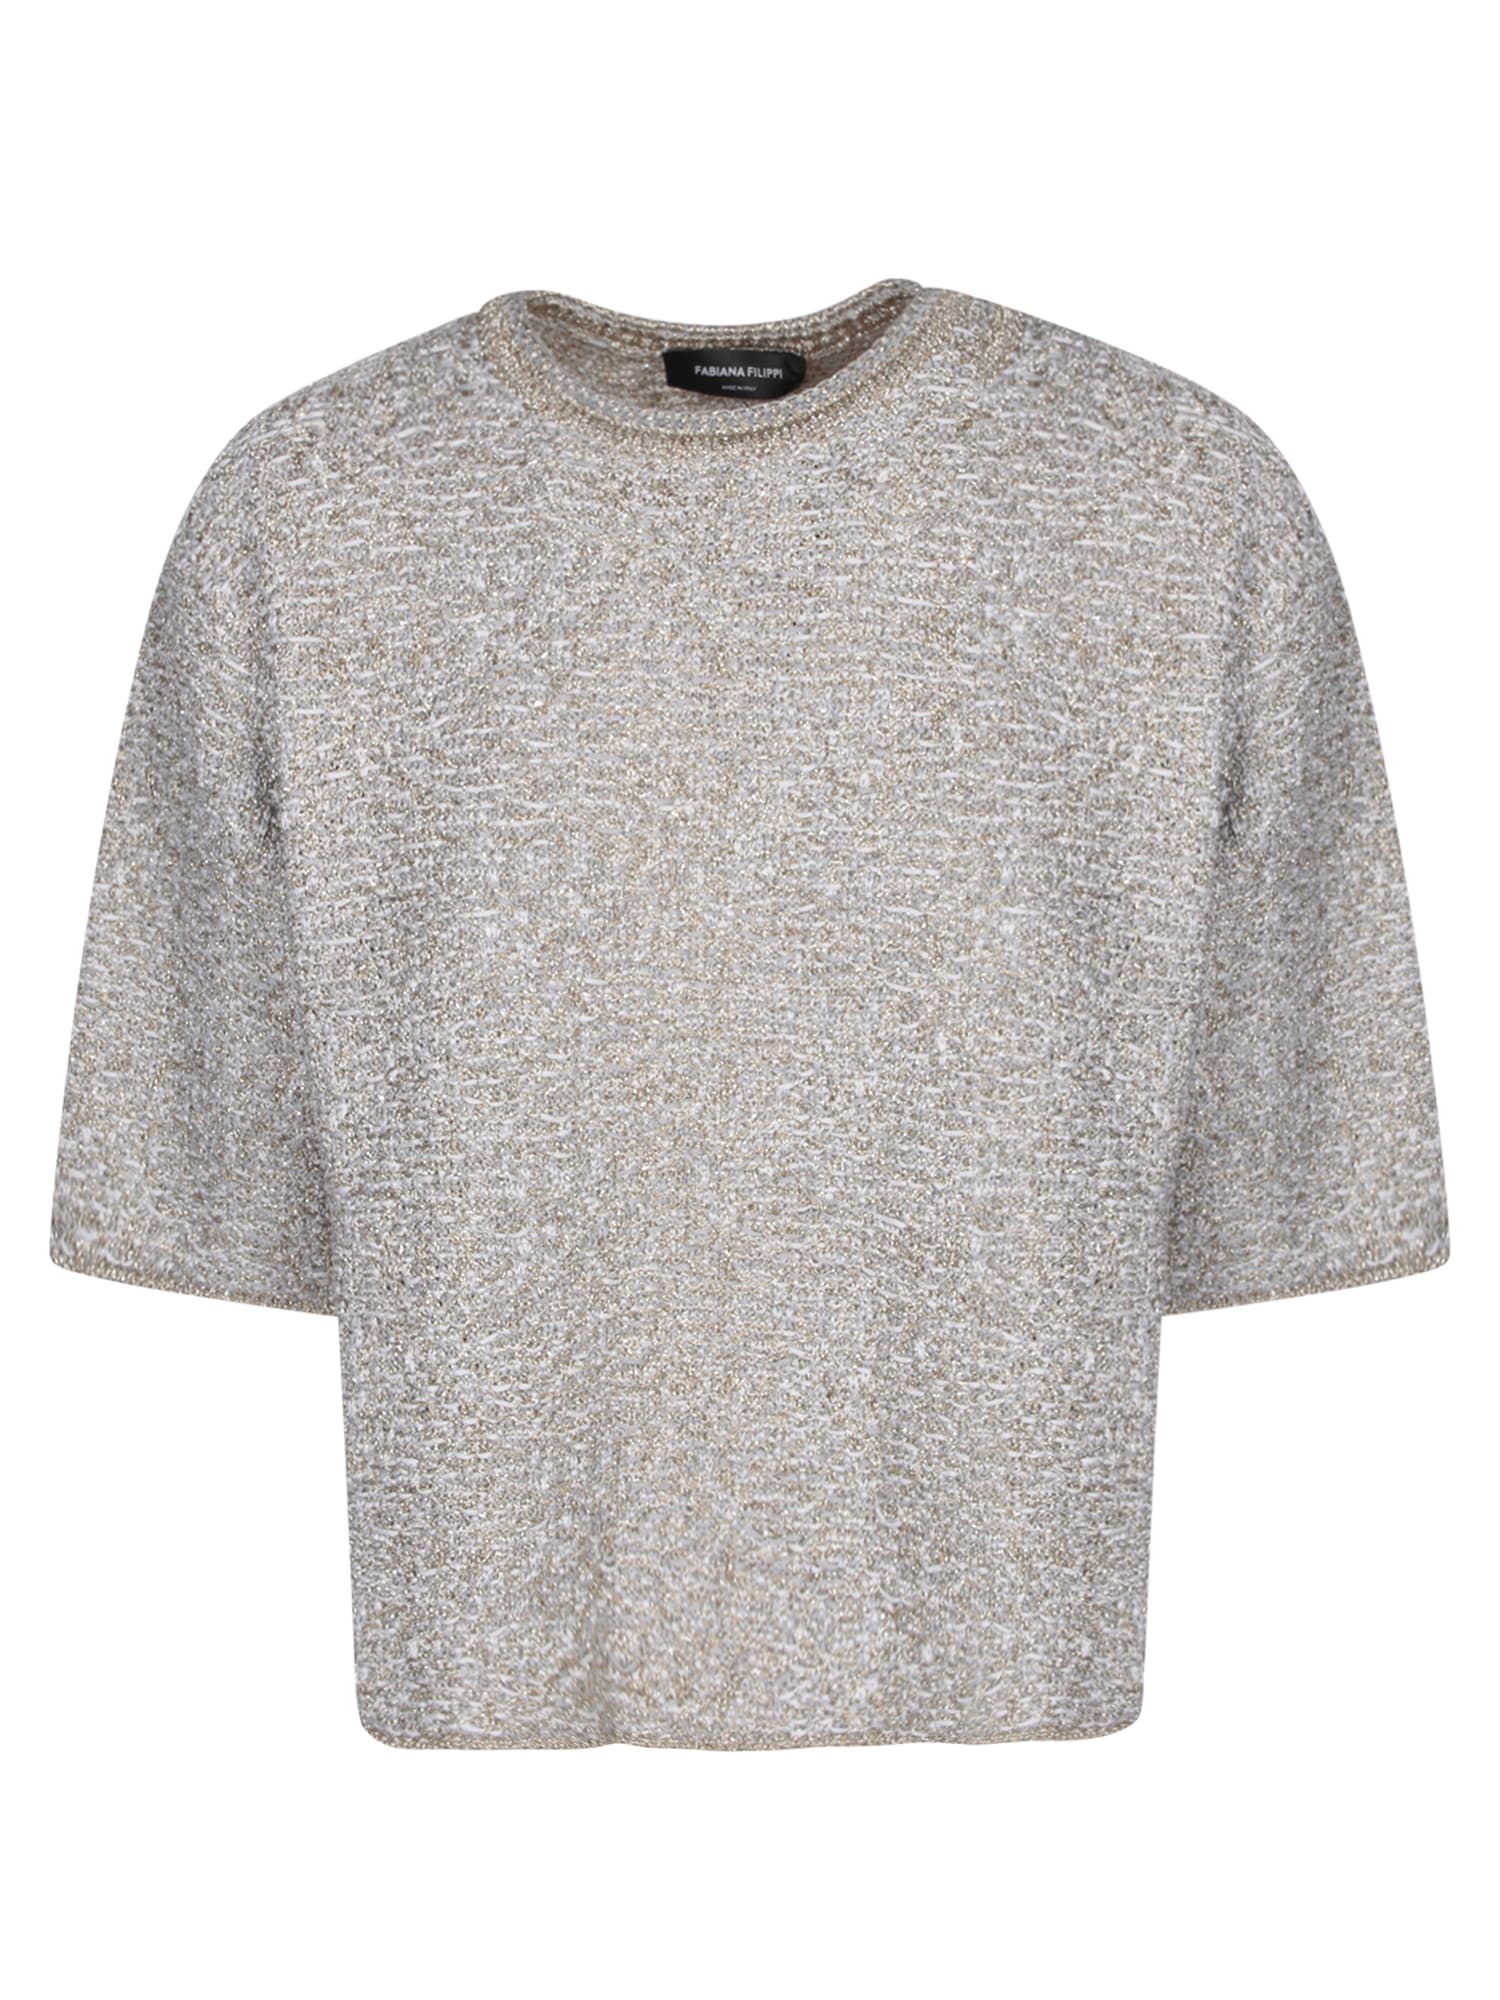 Gold7grey Tweed Effect Sweater